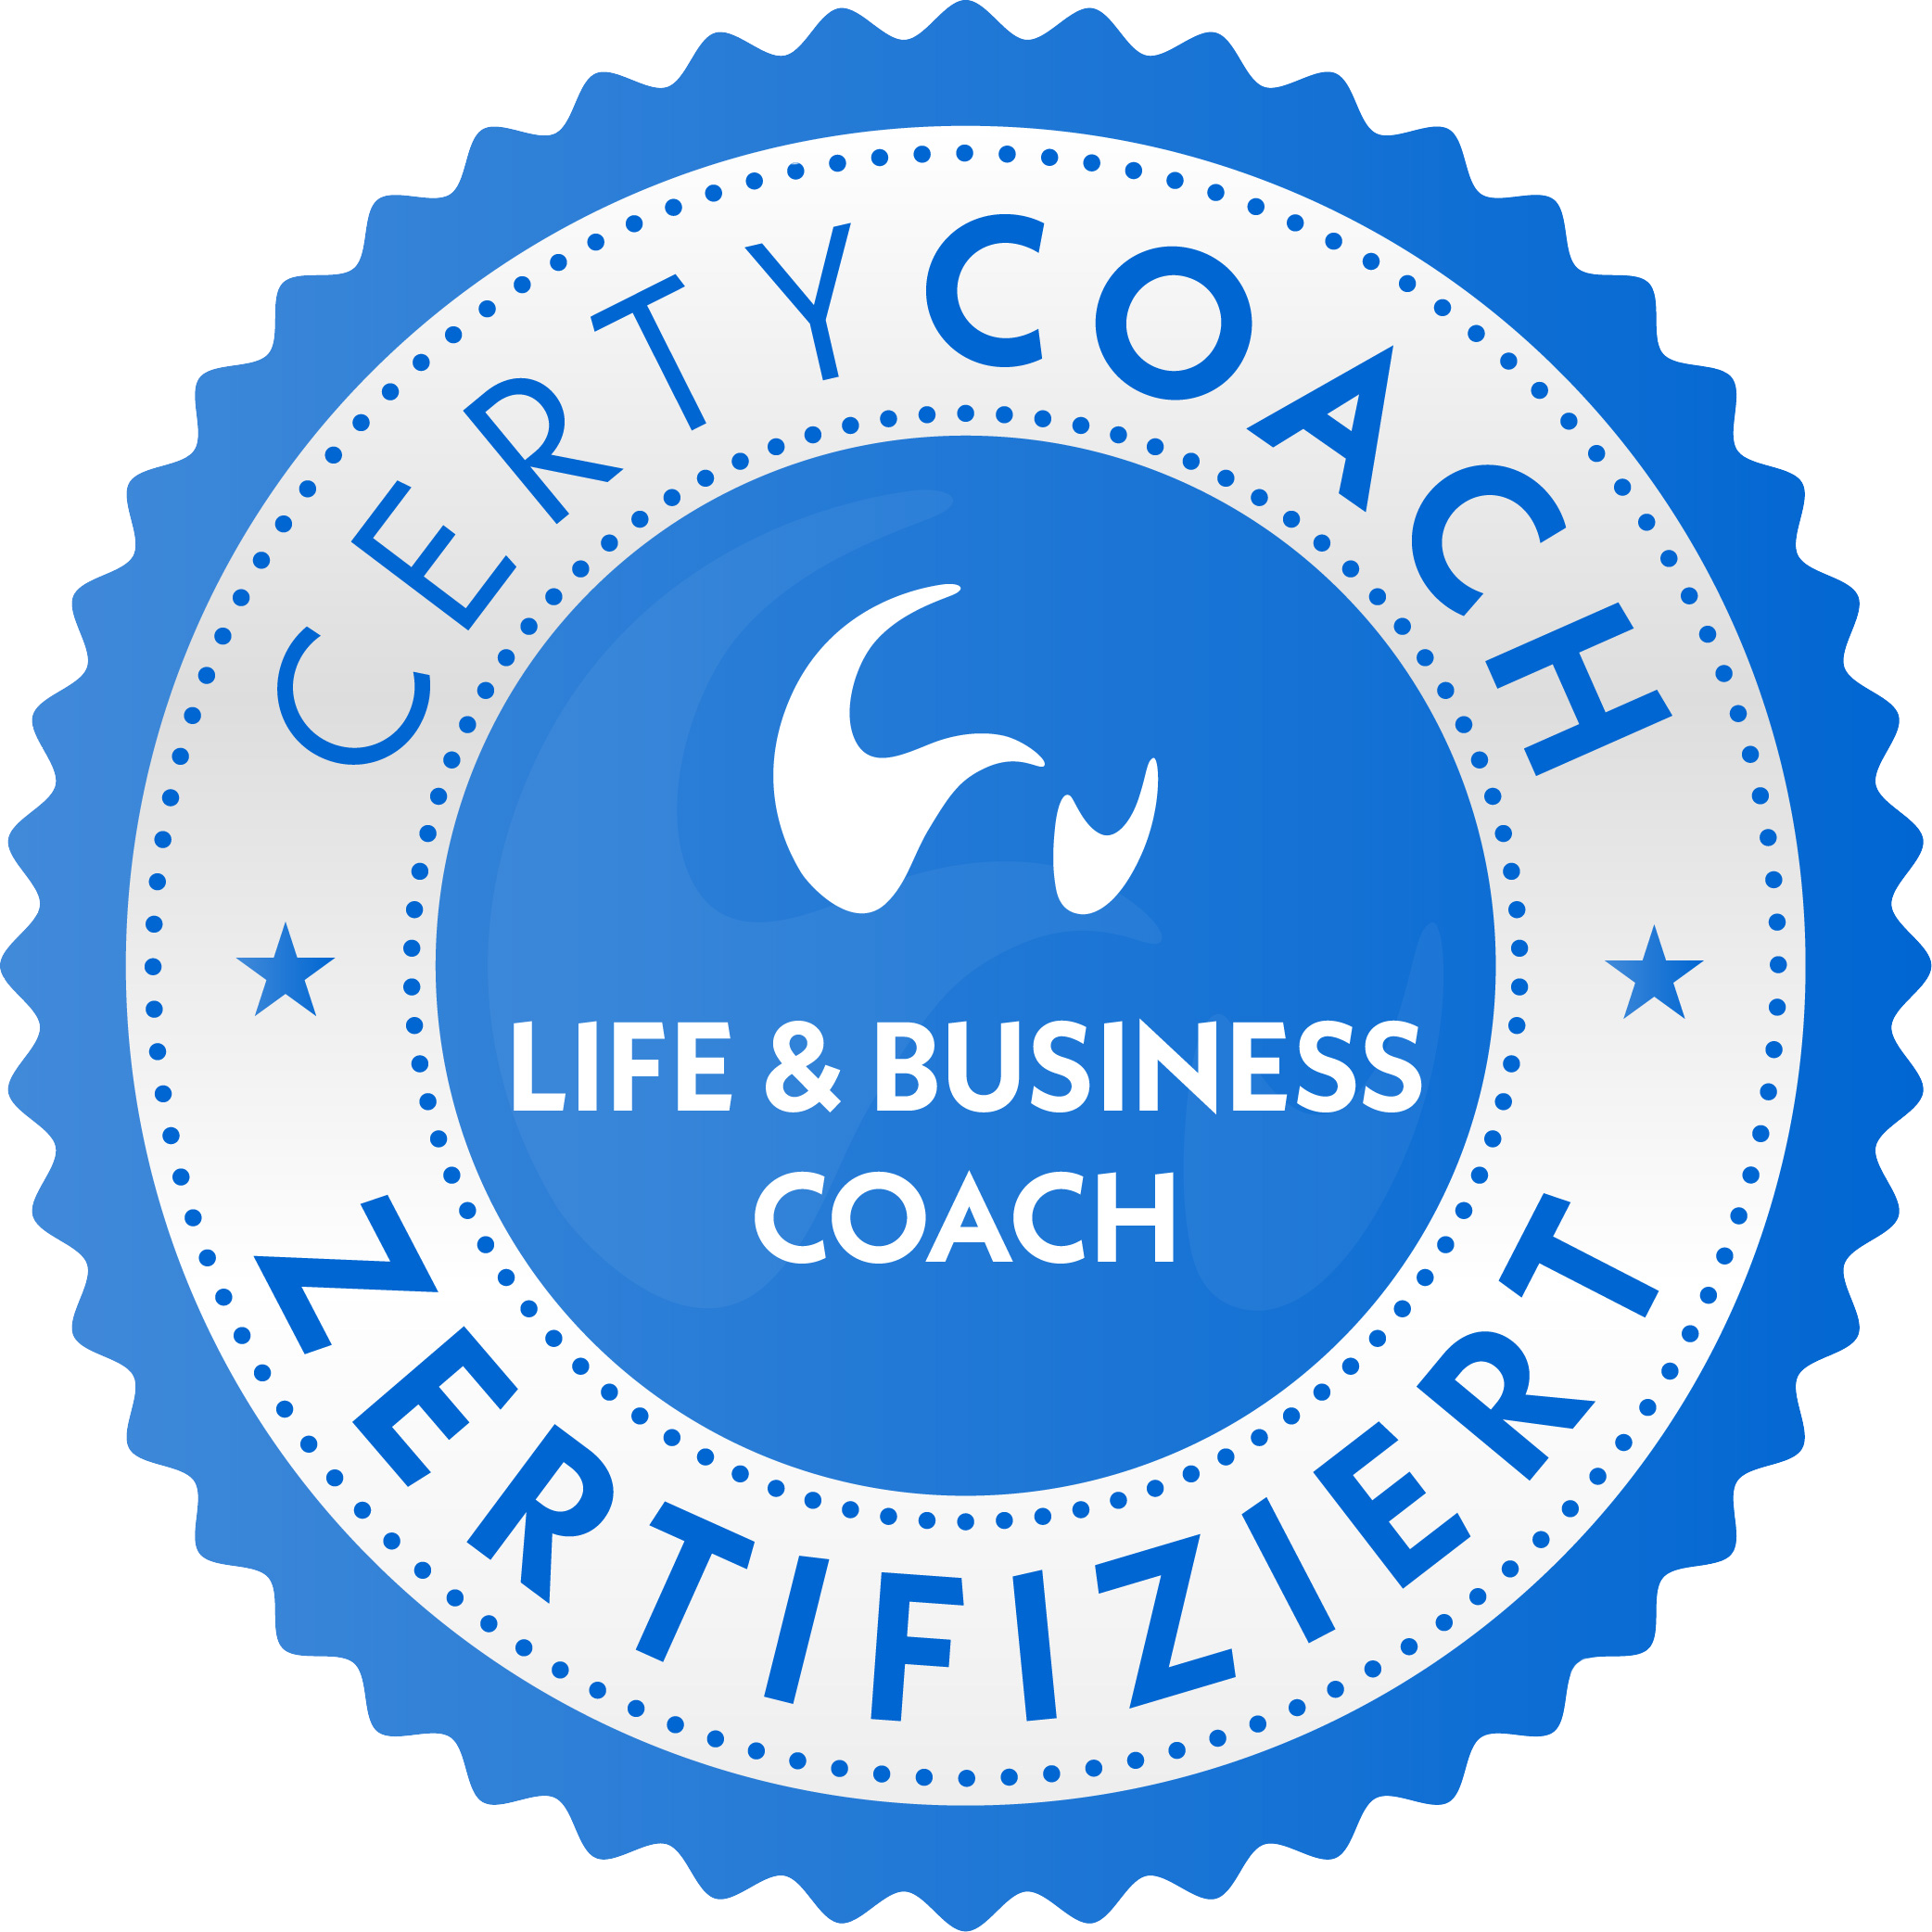 Wir sind 'CertyCoach Life & Business Coach' zertifiziert